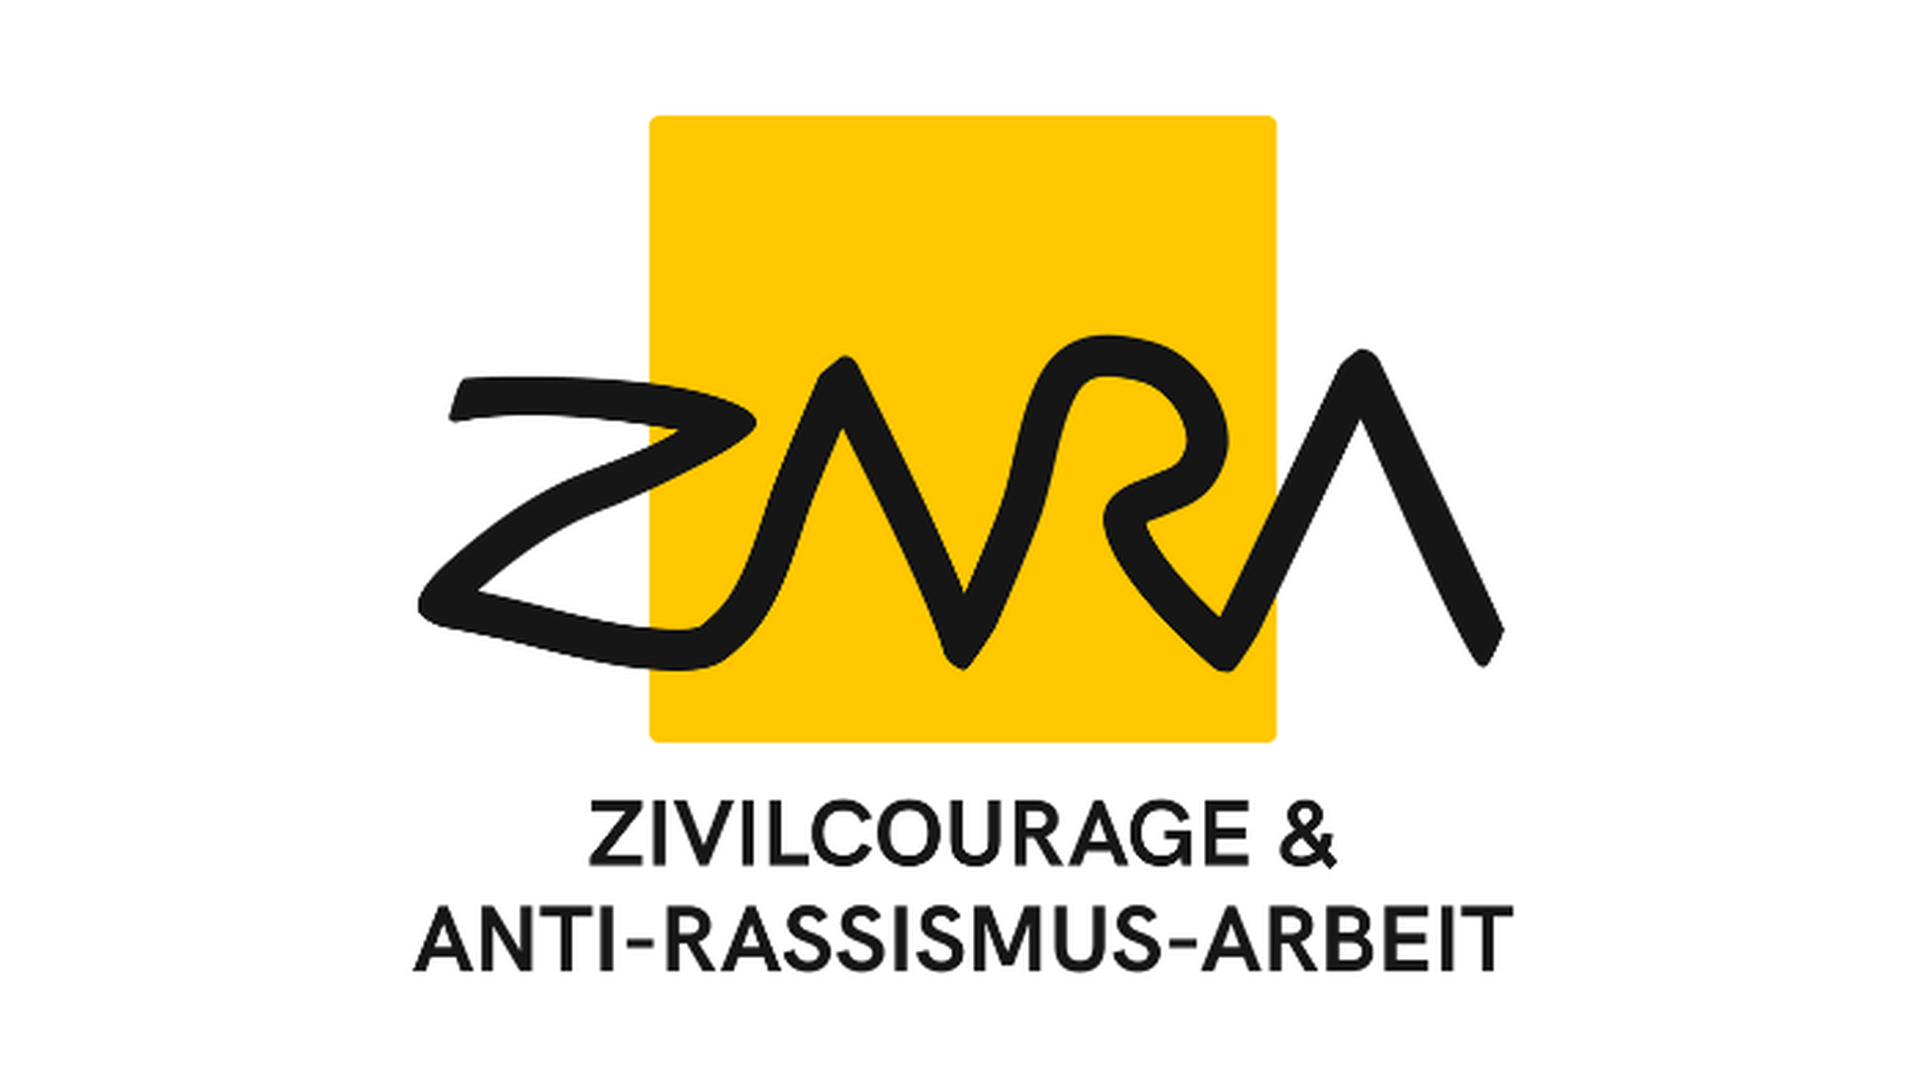 VEREIN ZARA ZIVILCOURAGE & ANTI-RASSIMUS-ARBEIT Logo